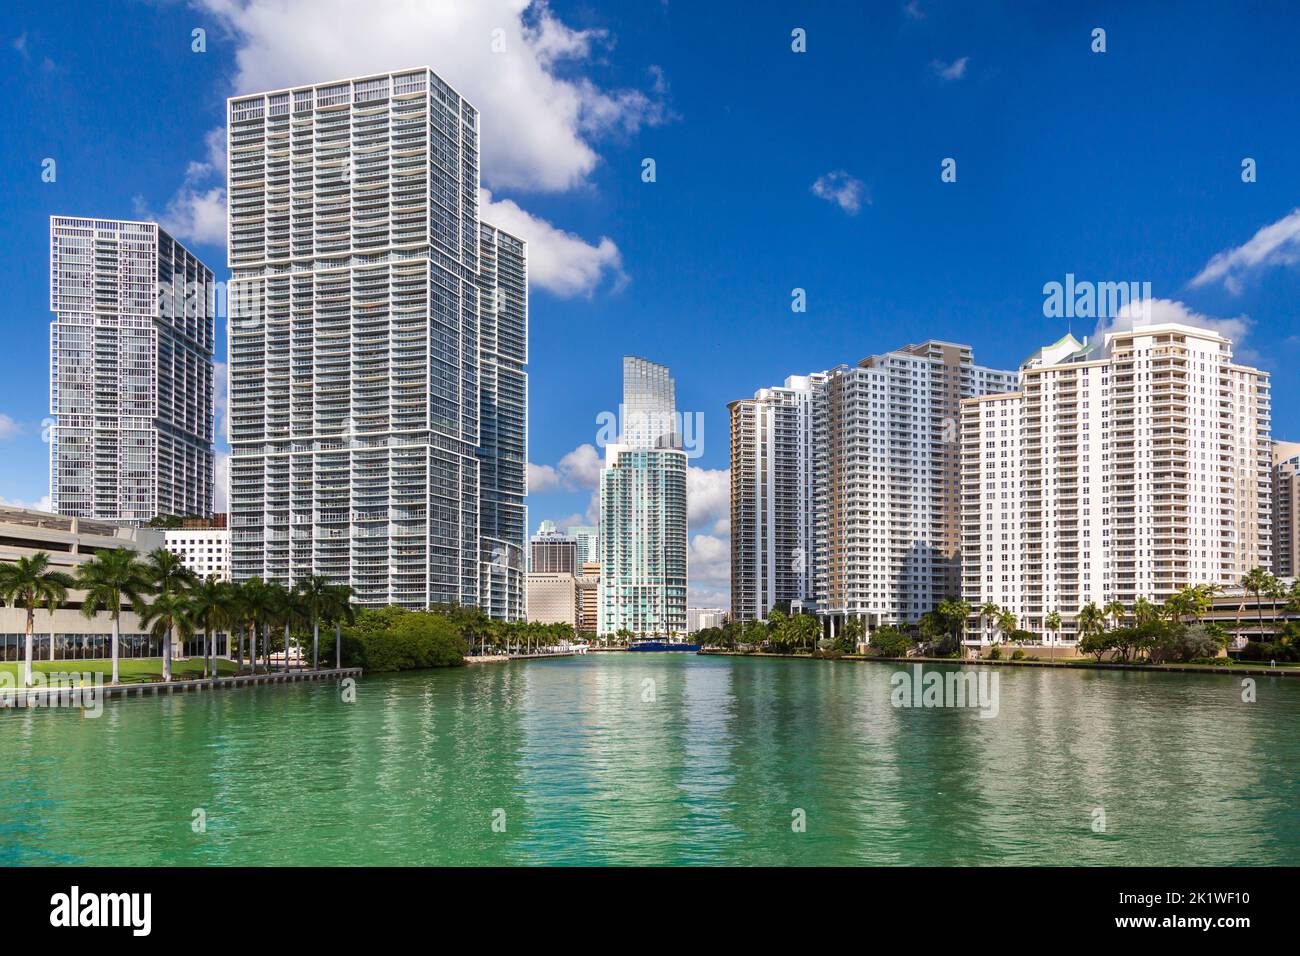 Apartments and condominiums reflected in the intercoastal waterway near Brickell Key, Florida, USA. Stock Photo